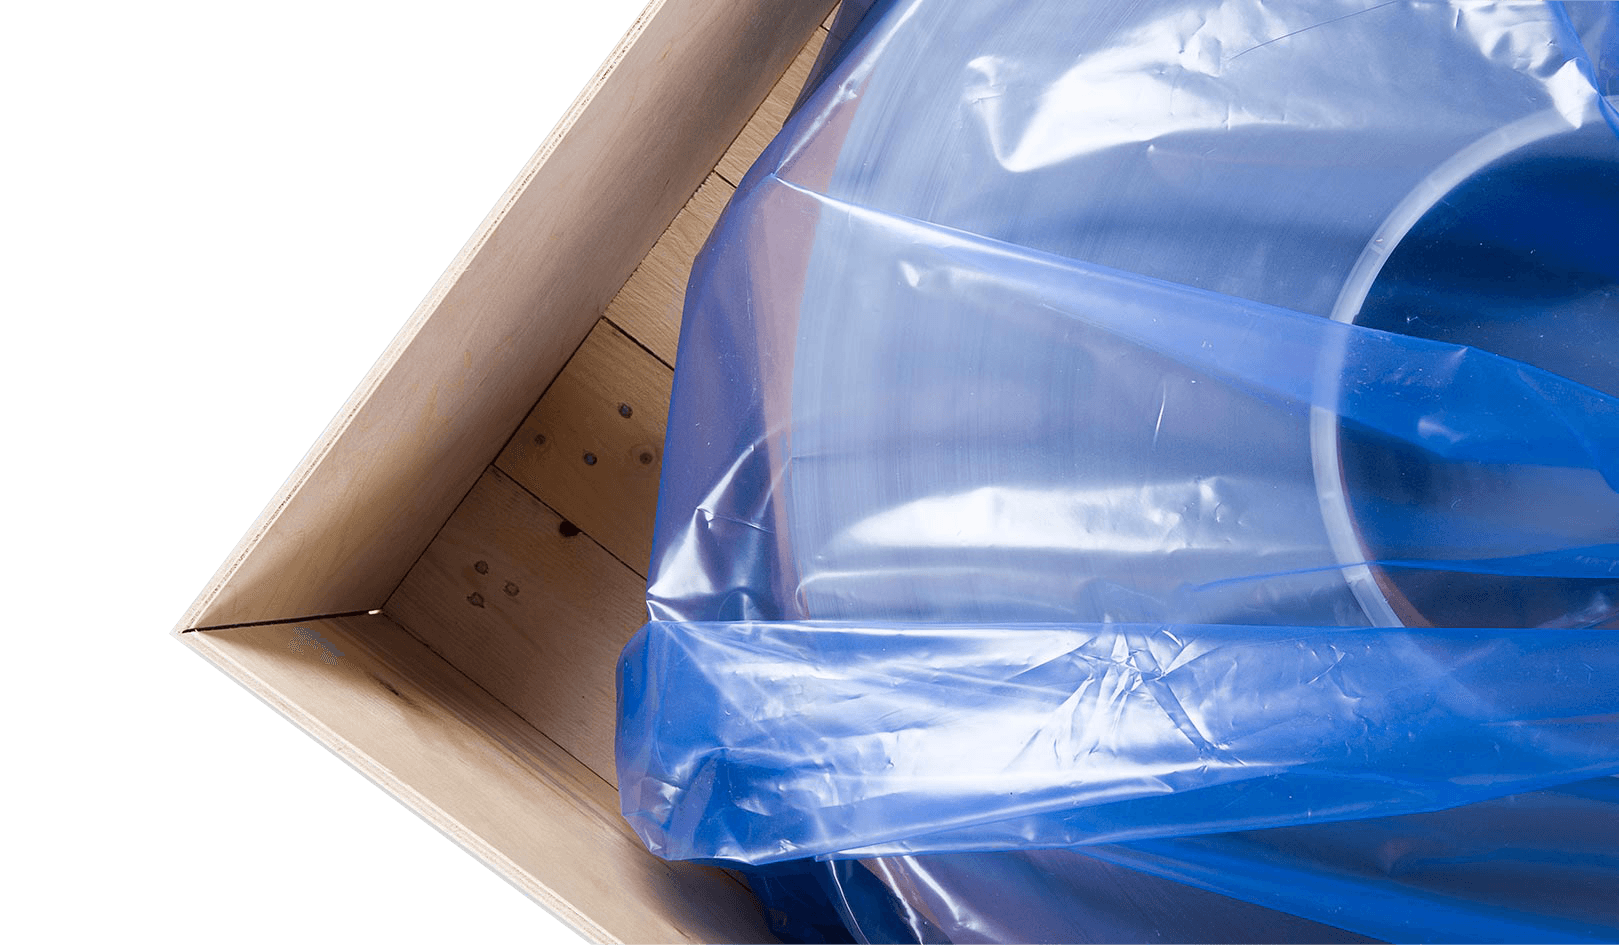 Emballage de protection contre la corrosion